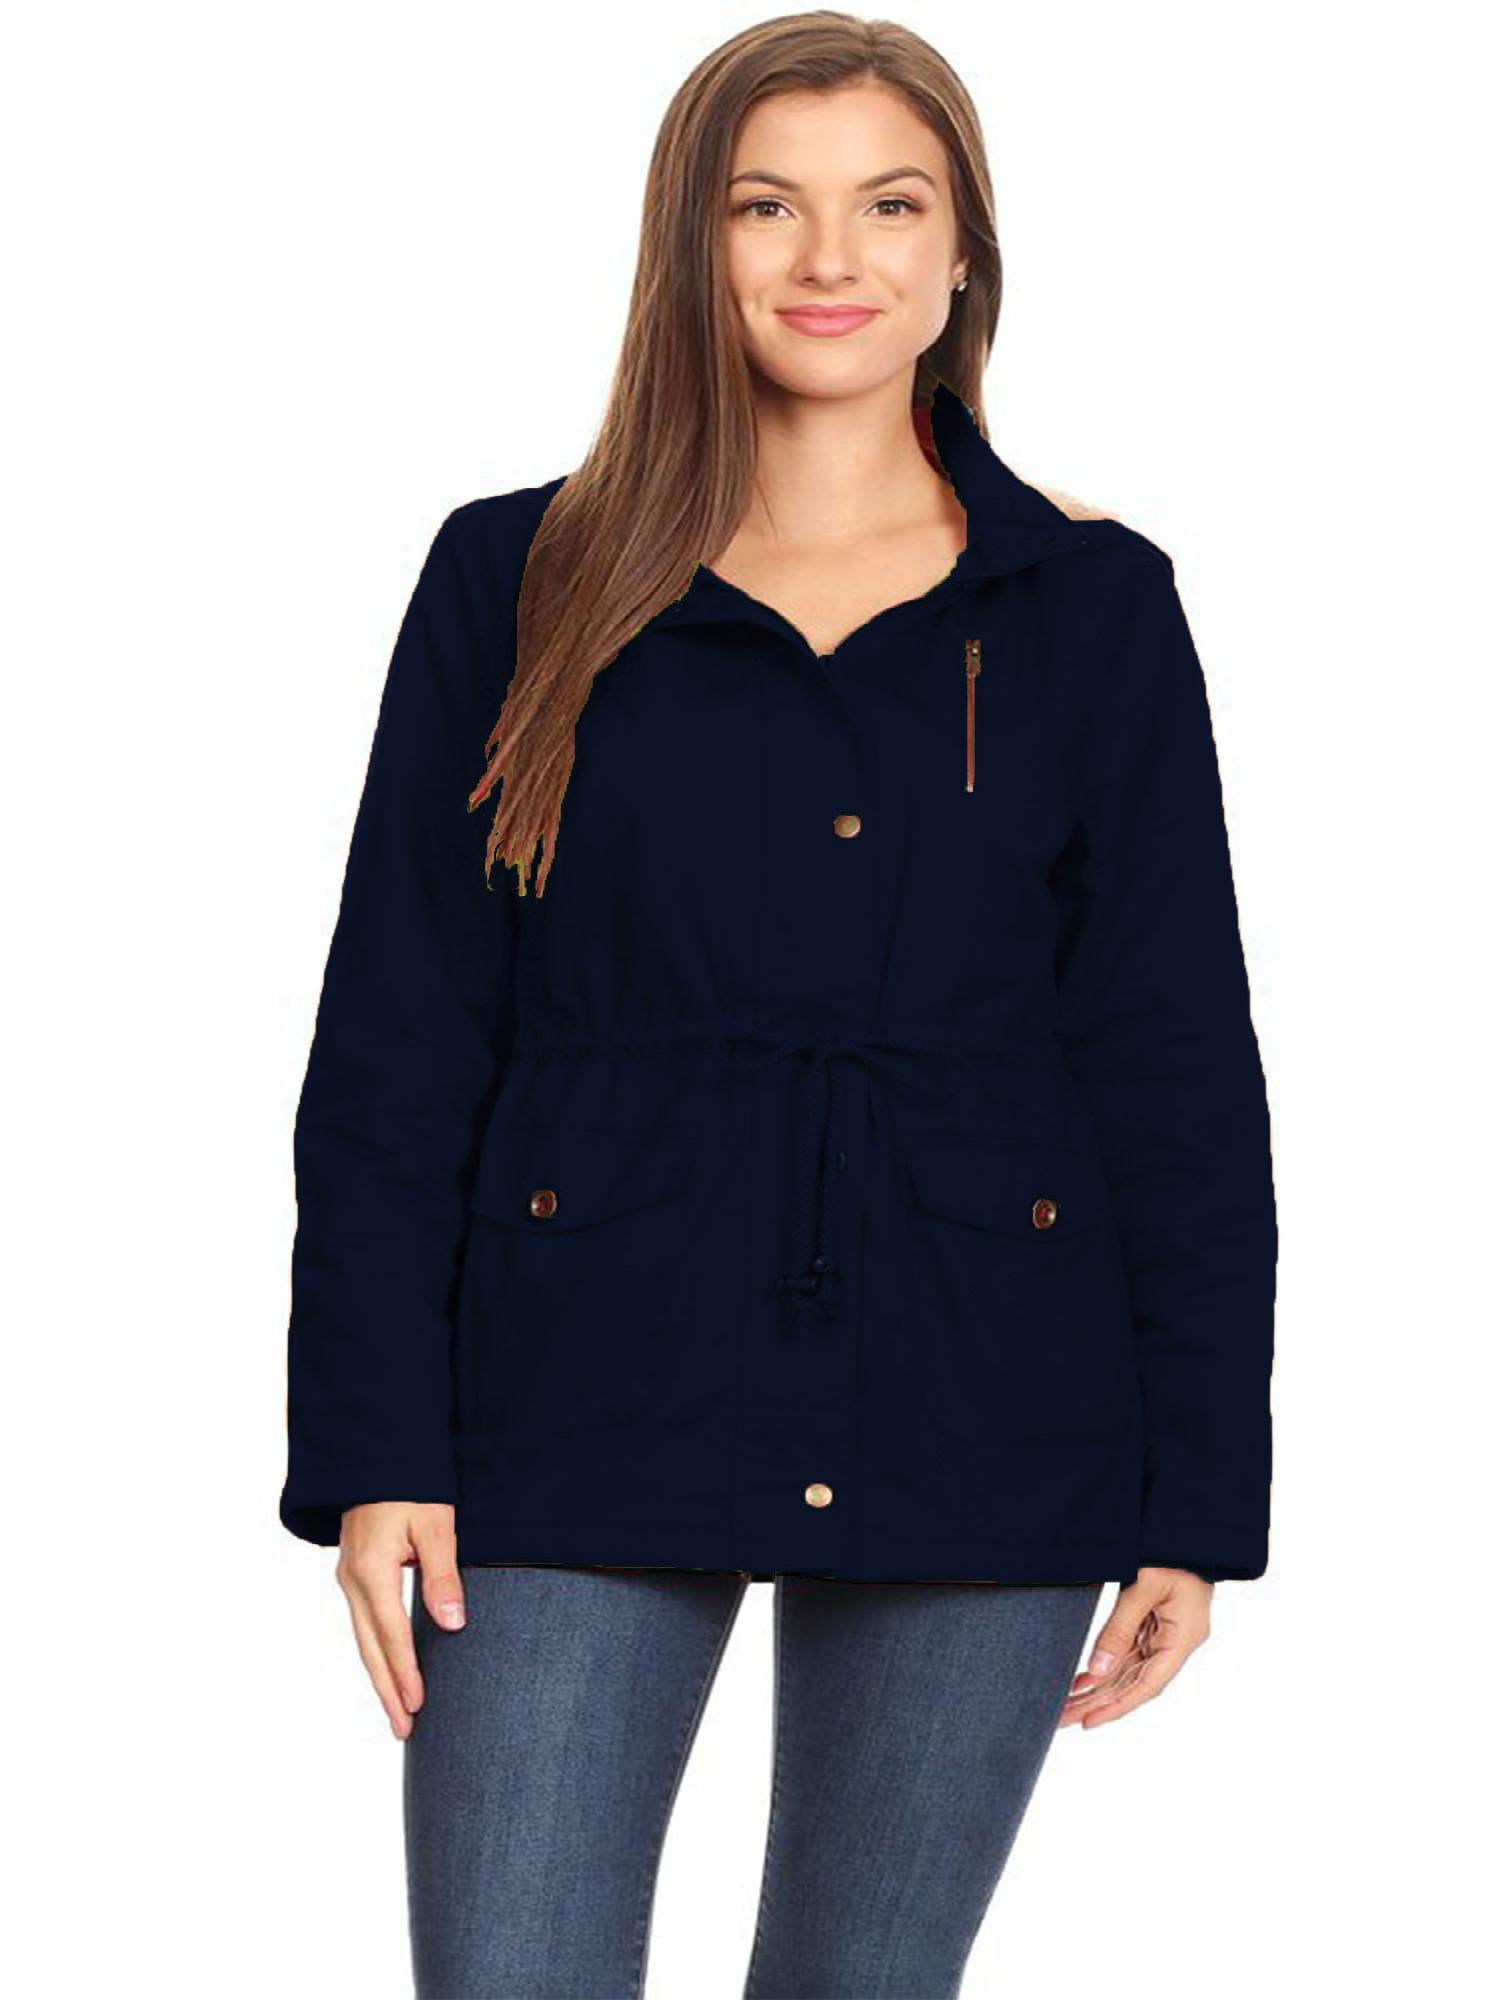 FashionJOA - Women's Solid Basic Zipper Front Utility Jacket Coat with ...